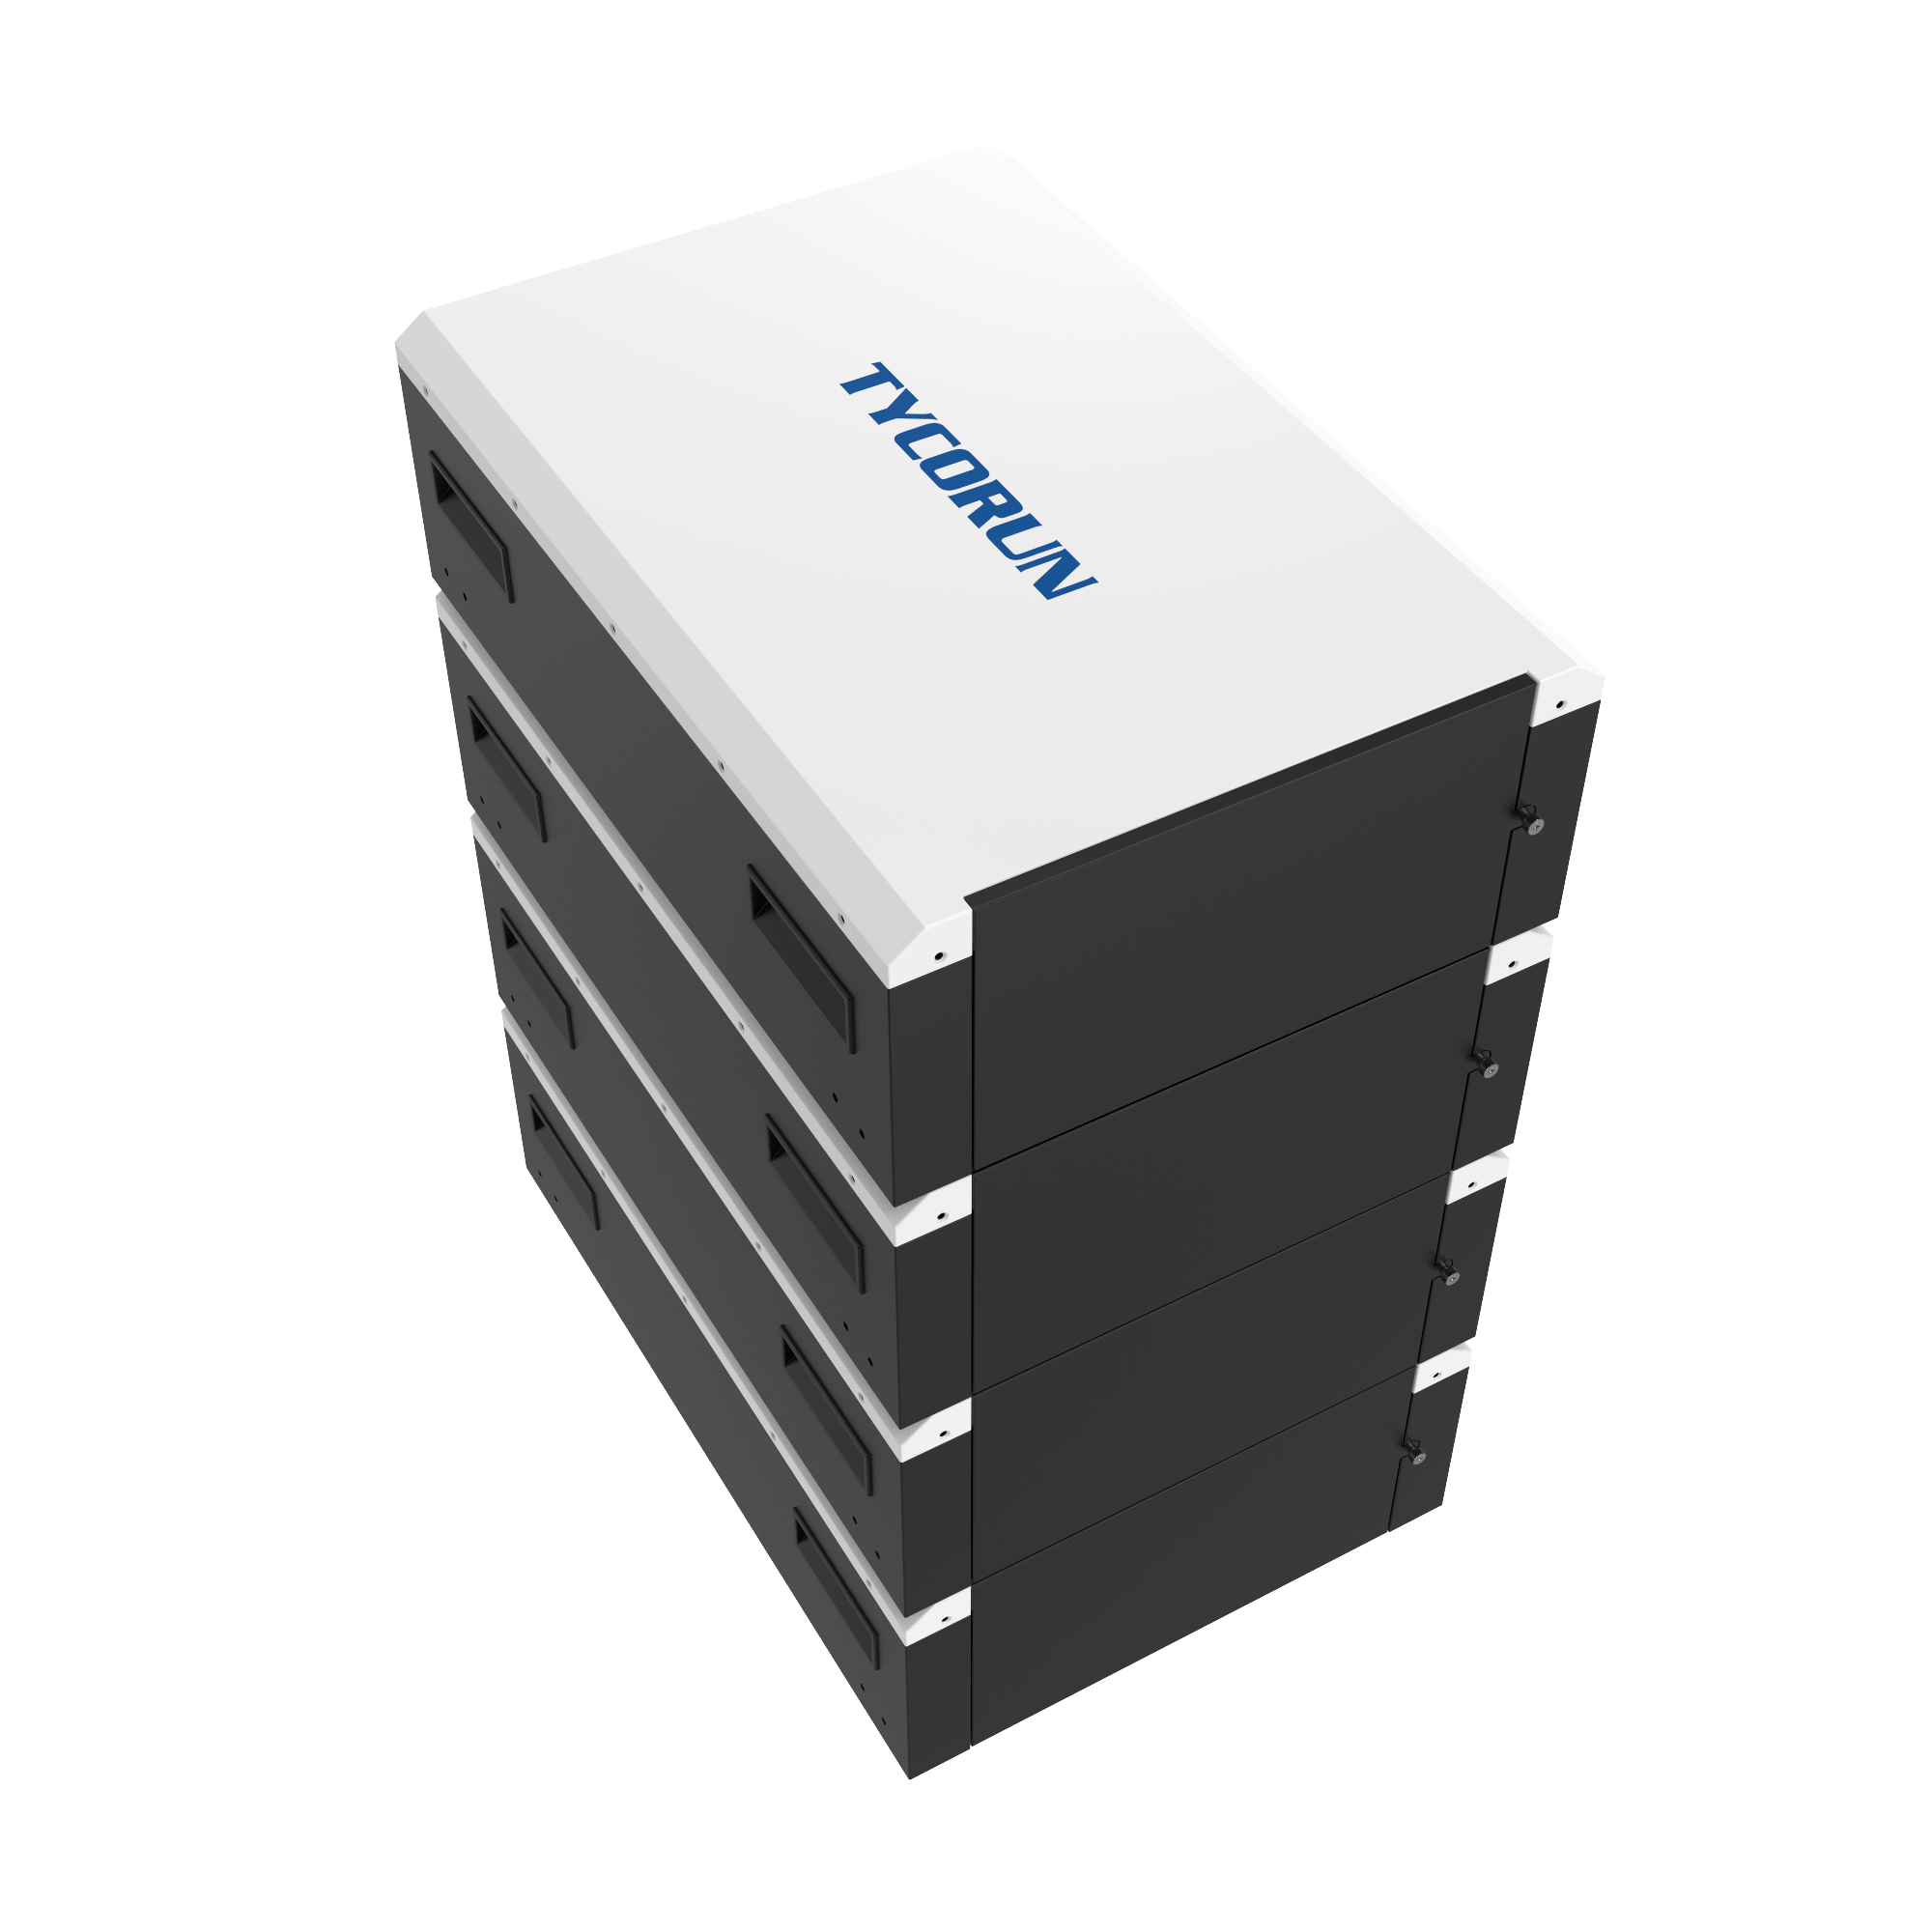 Tycorun Energy's Powerwall uses the Brand New Grade A LifePO4 battery